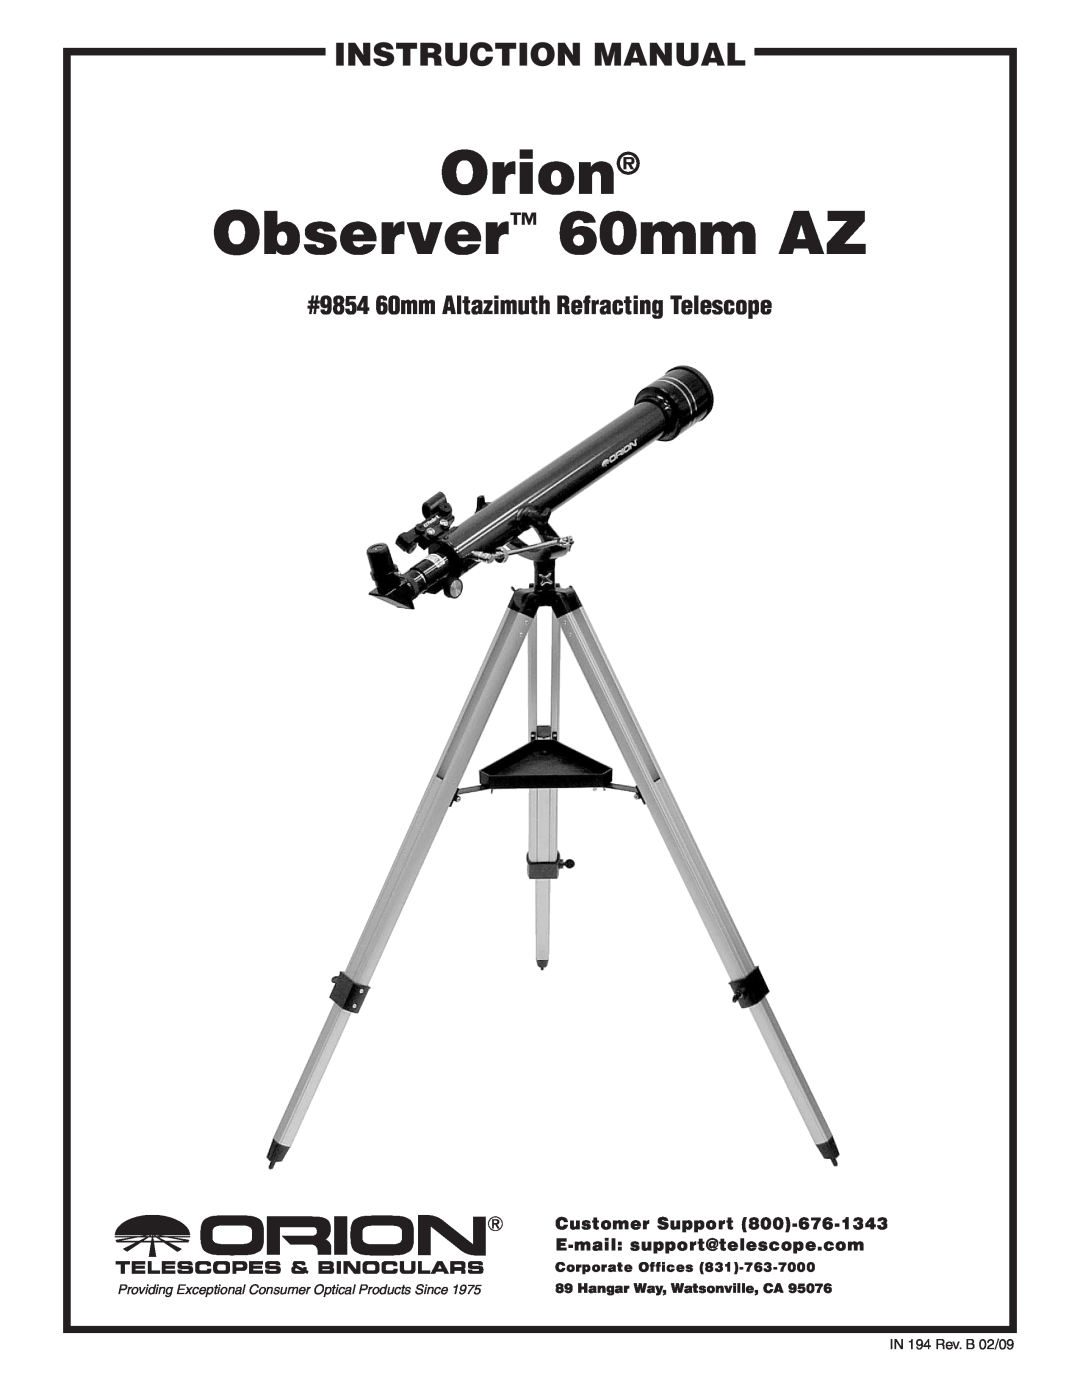 Orion instruction manual #9854 60mm Altazimuth Refracting Telescope, Orion Observer 60mm AZ 